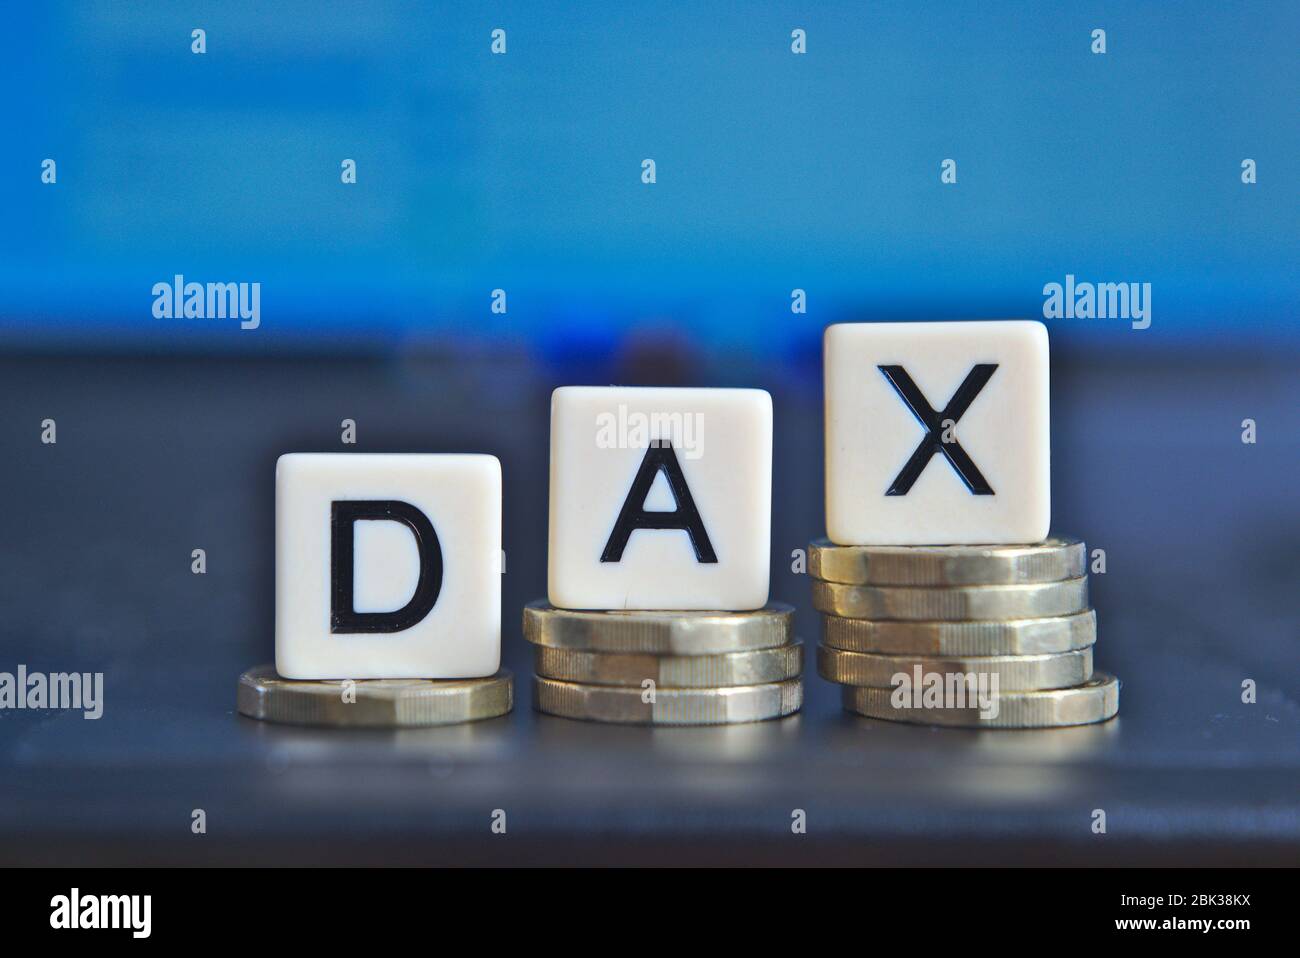 DAX German stock exchange market index Stock Photo